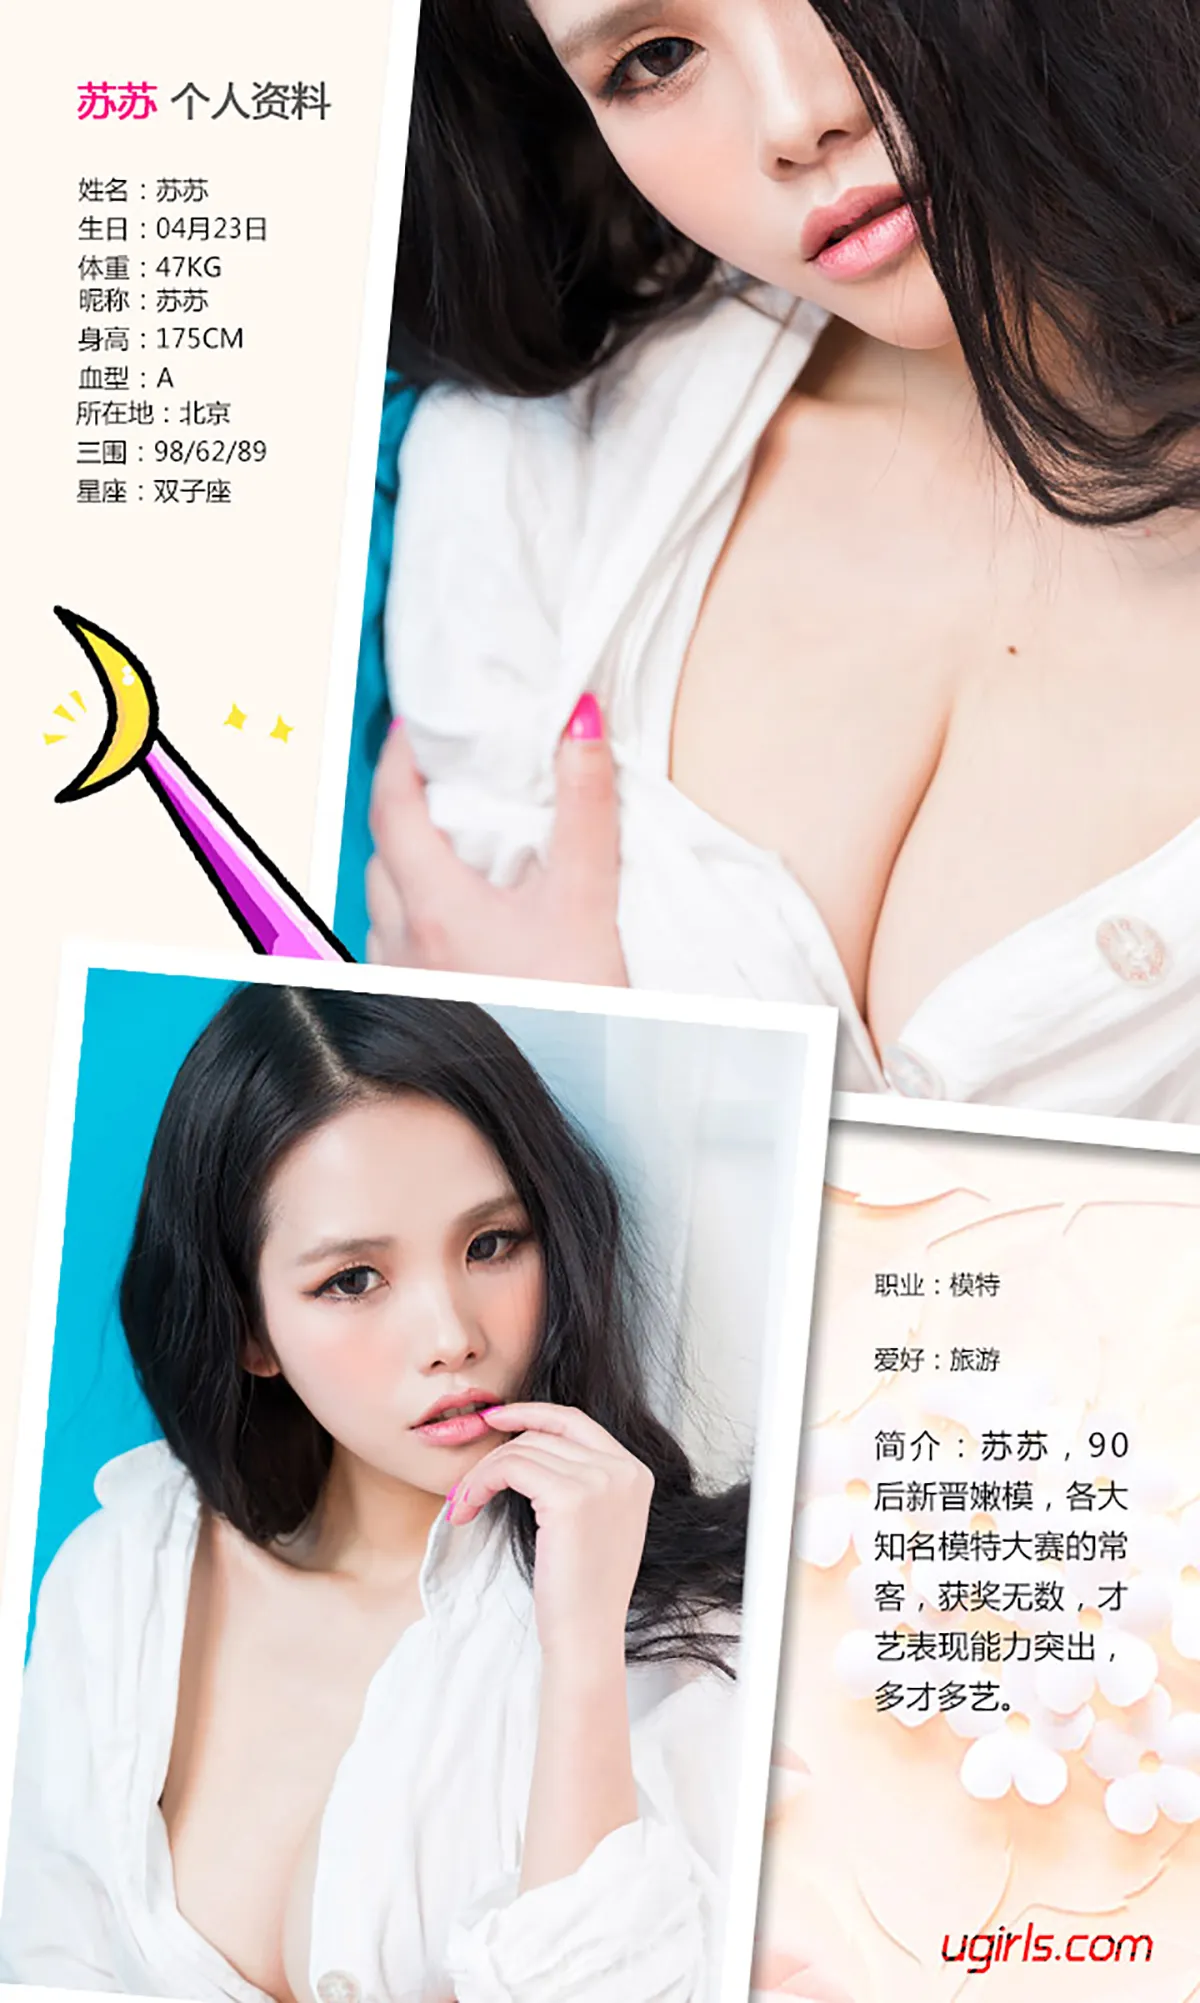 UGIRLS NO.322 Pretty Chinese Girl 苏苏白日焰火